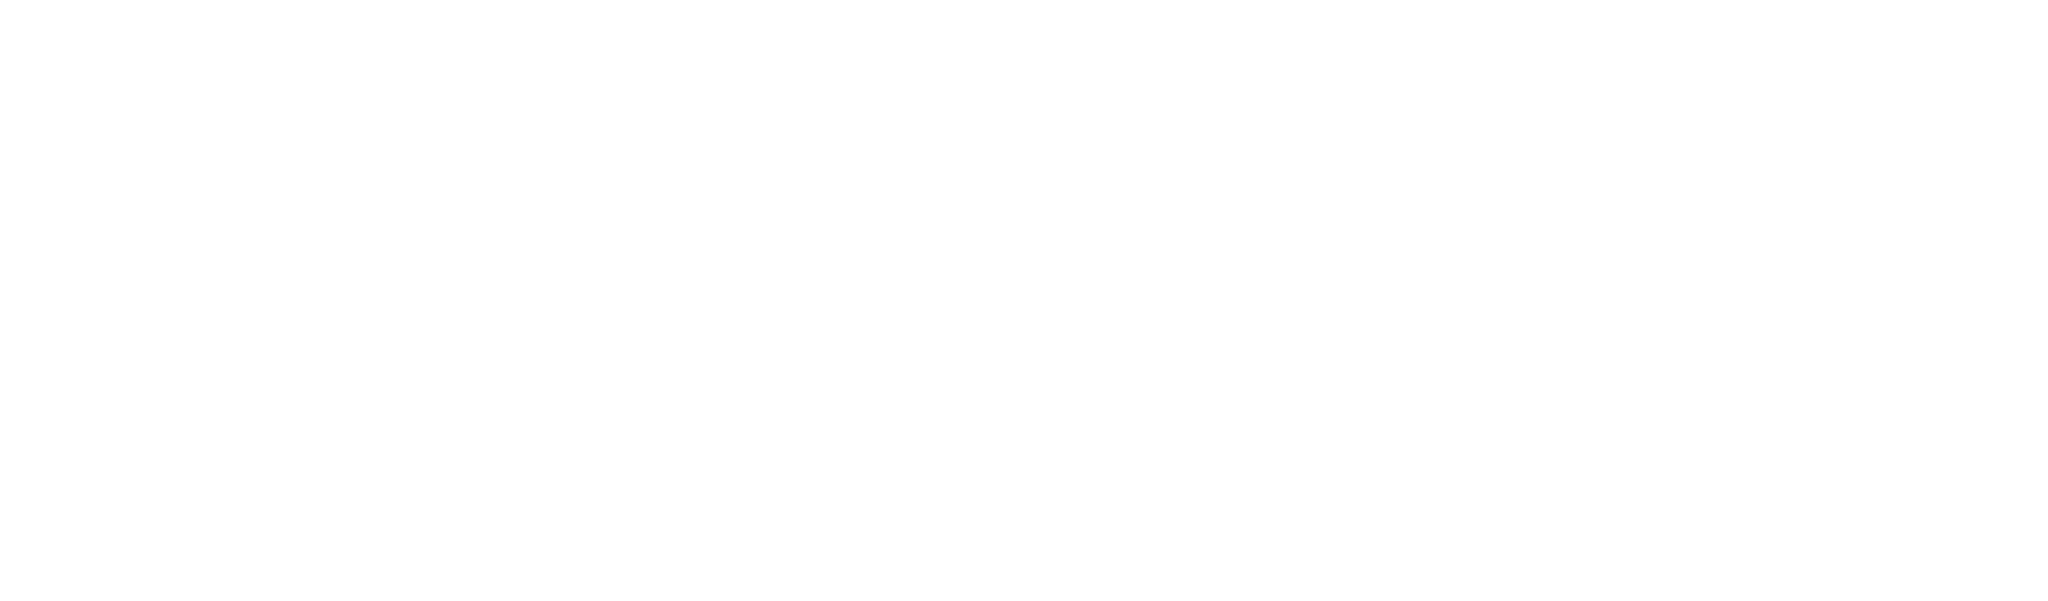 MyData 2023 Conference